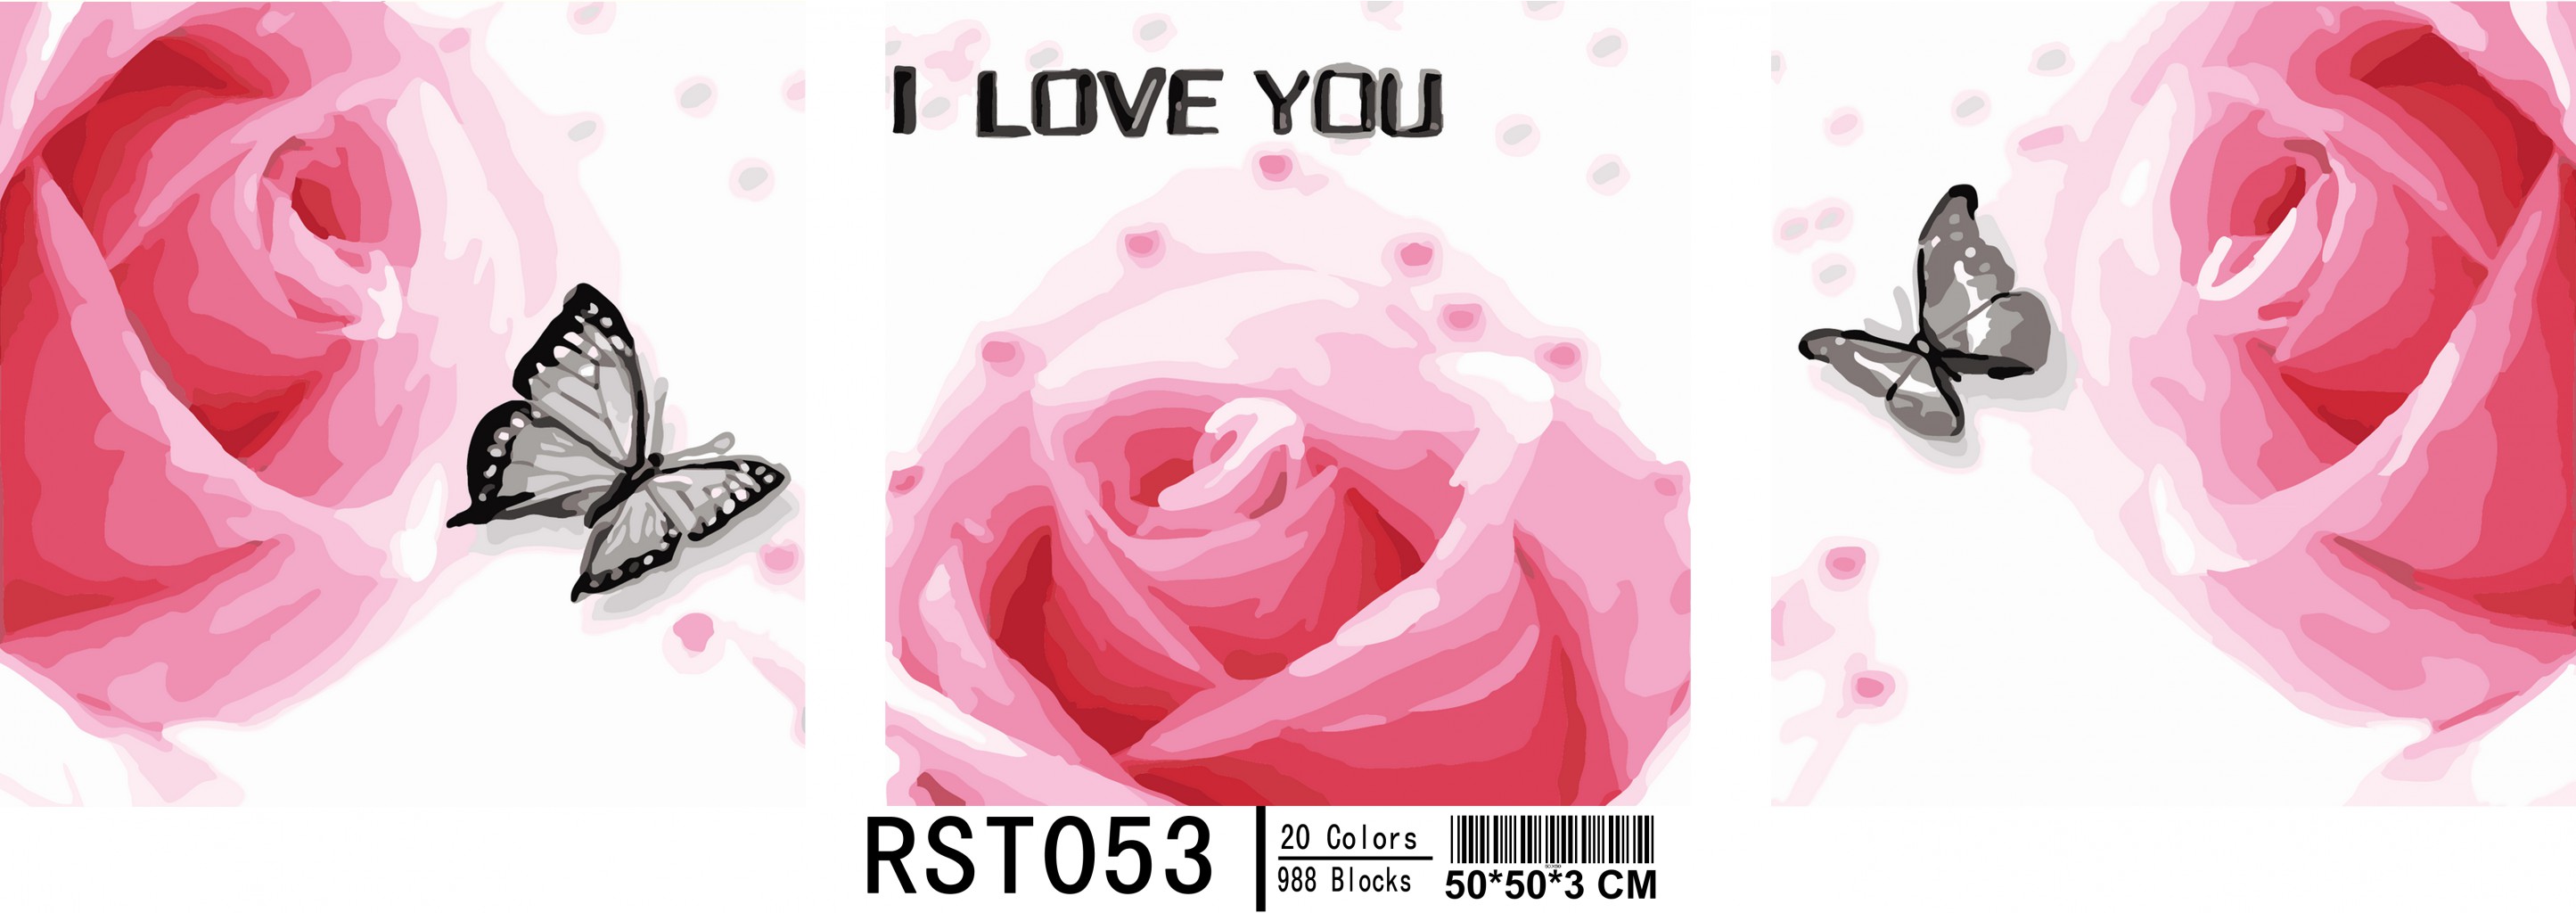 RST053.jpg